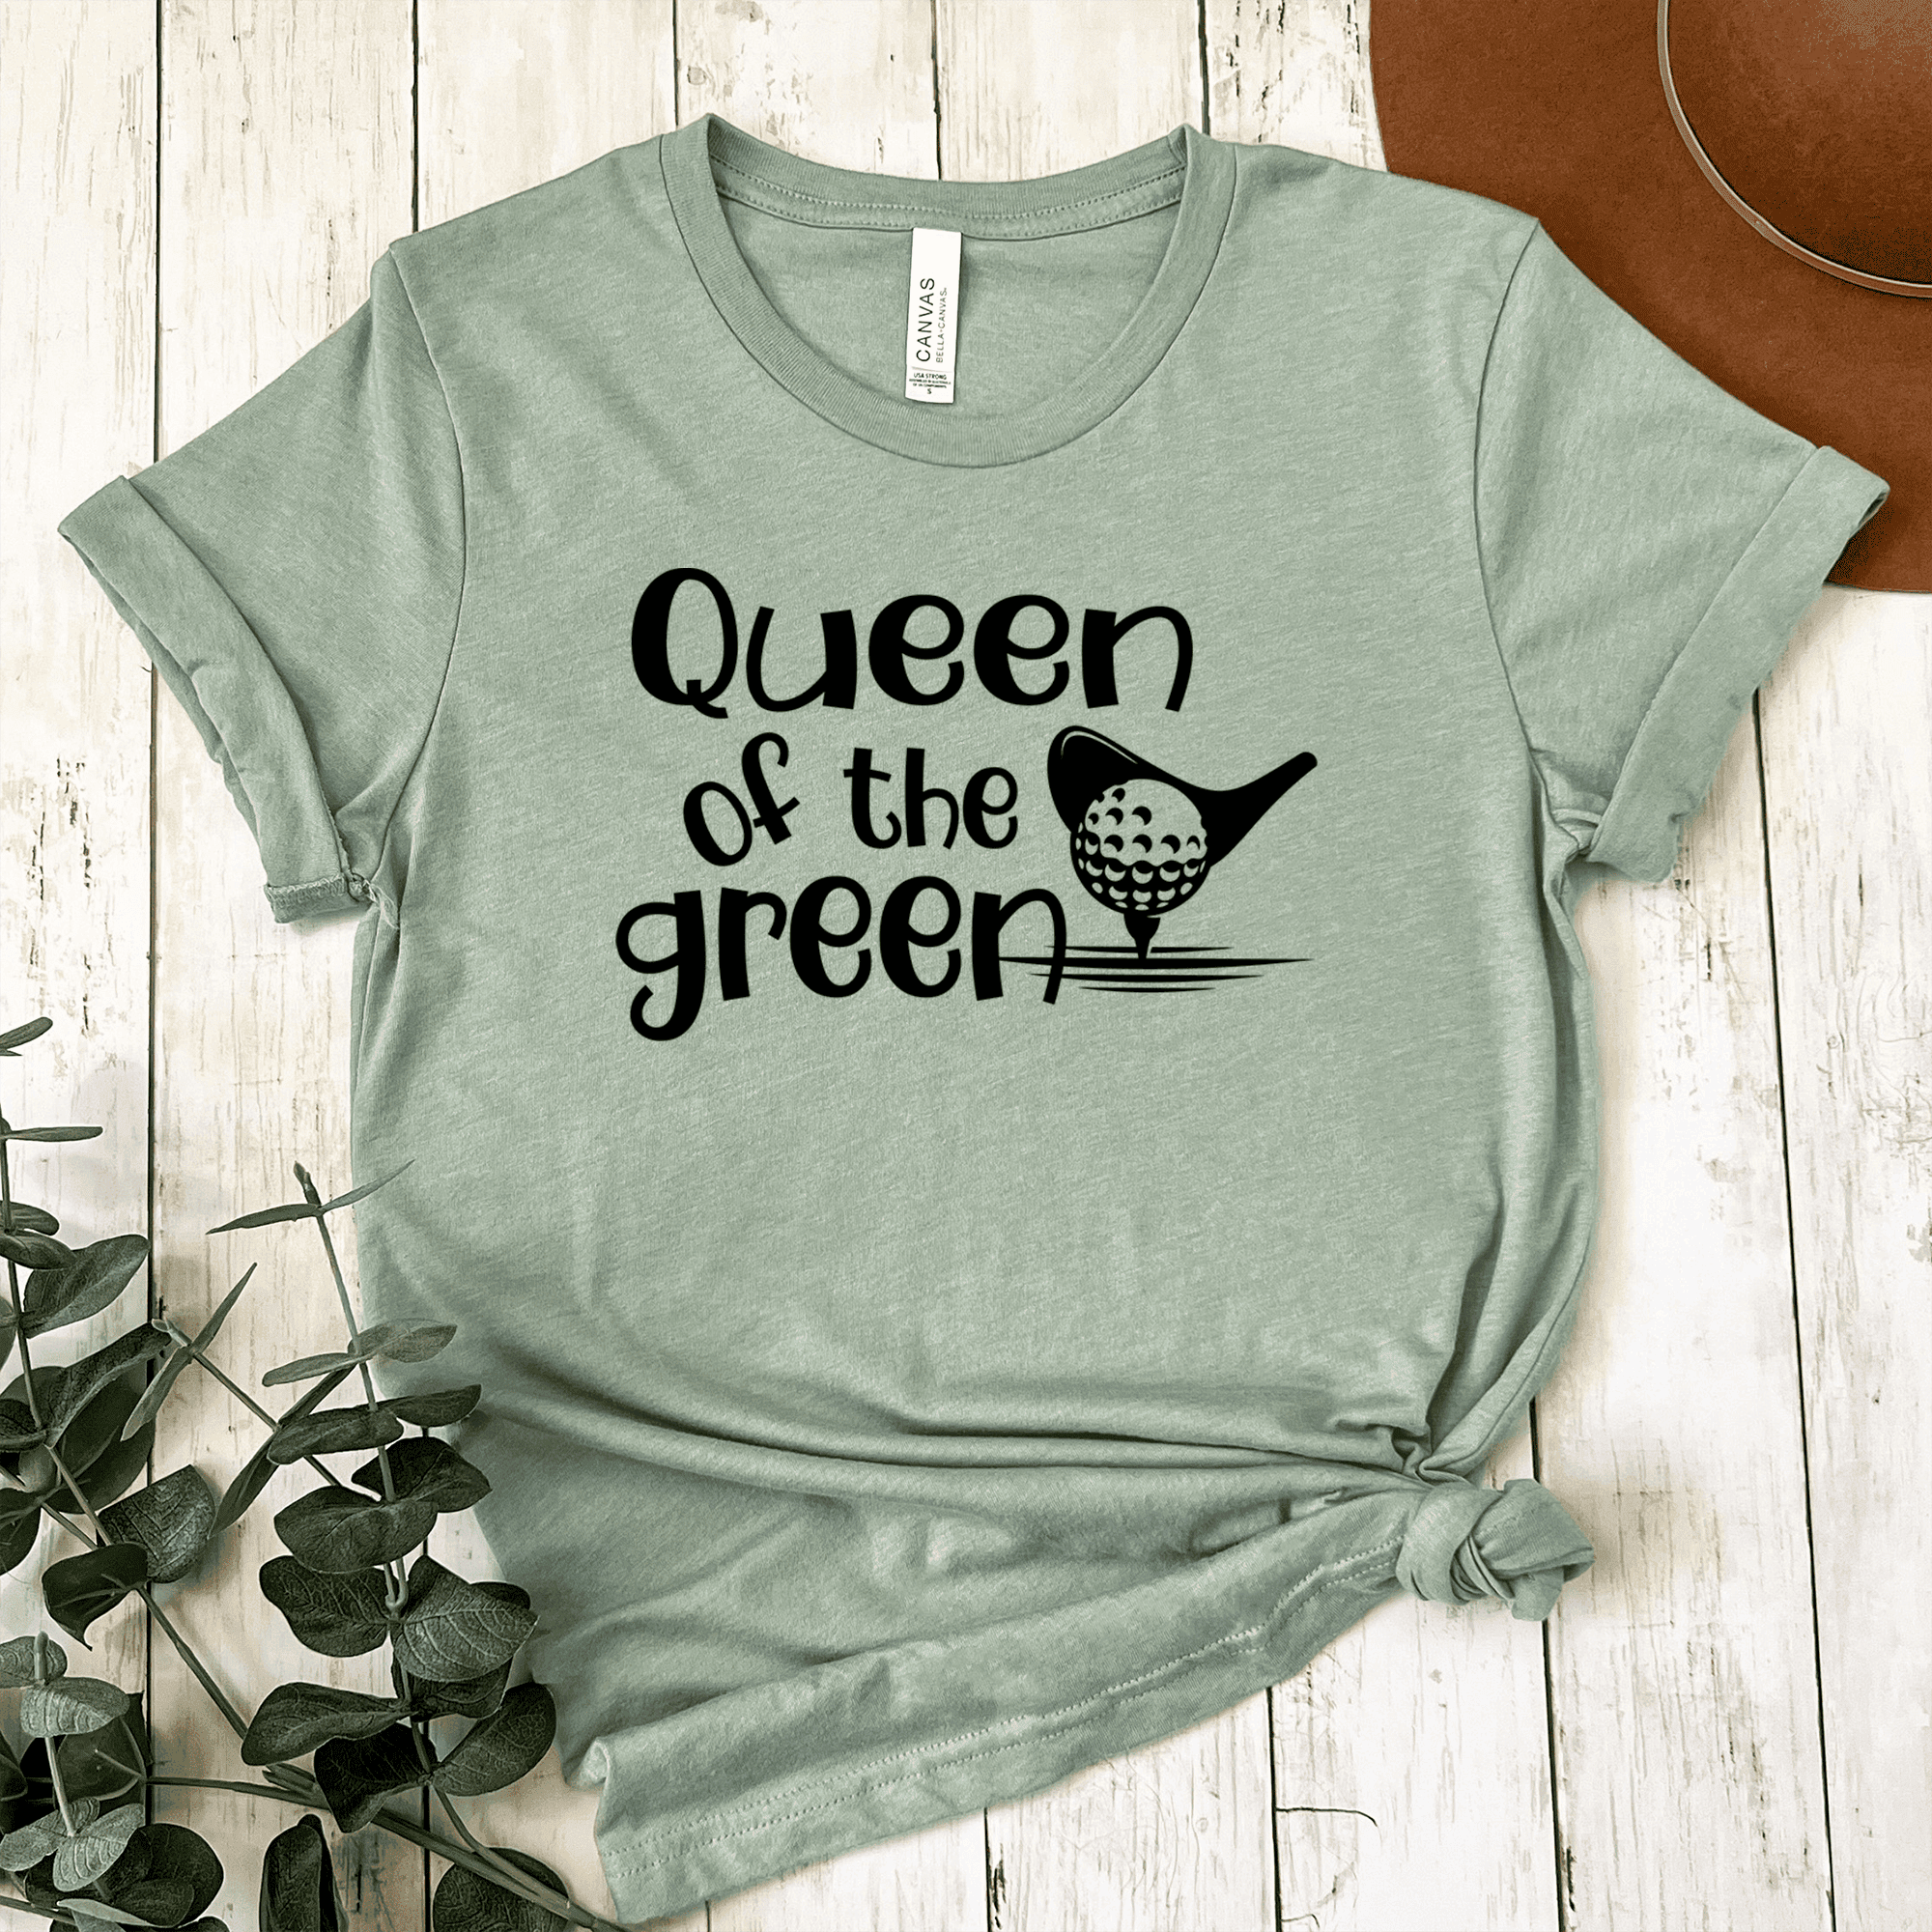 Womens Light Green T Shirt with Queen-Of-The-Green design